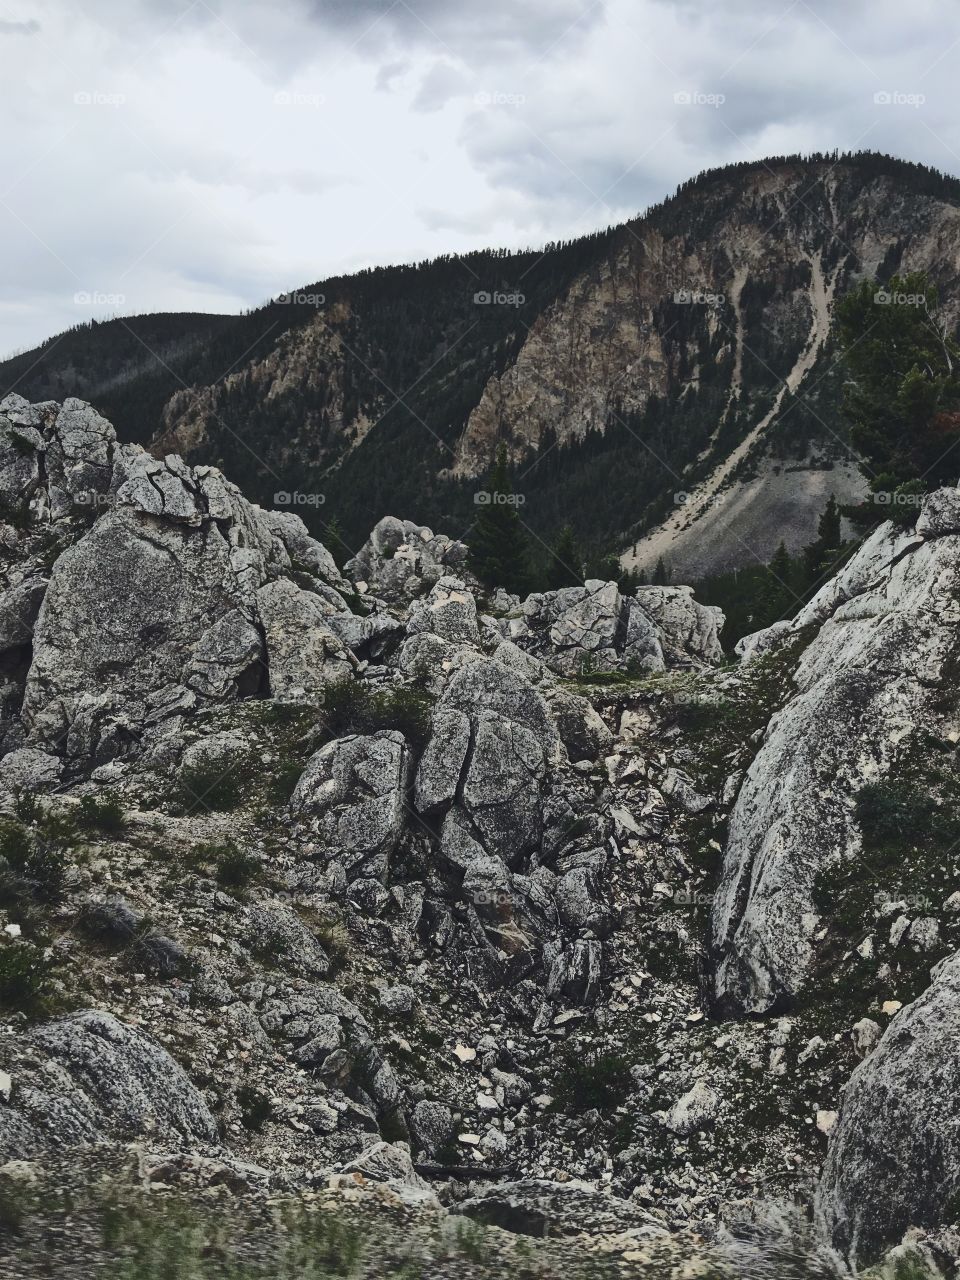 The rocks of Yellowstone 